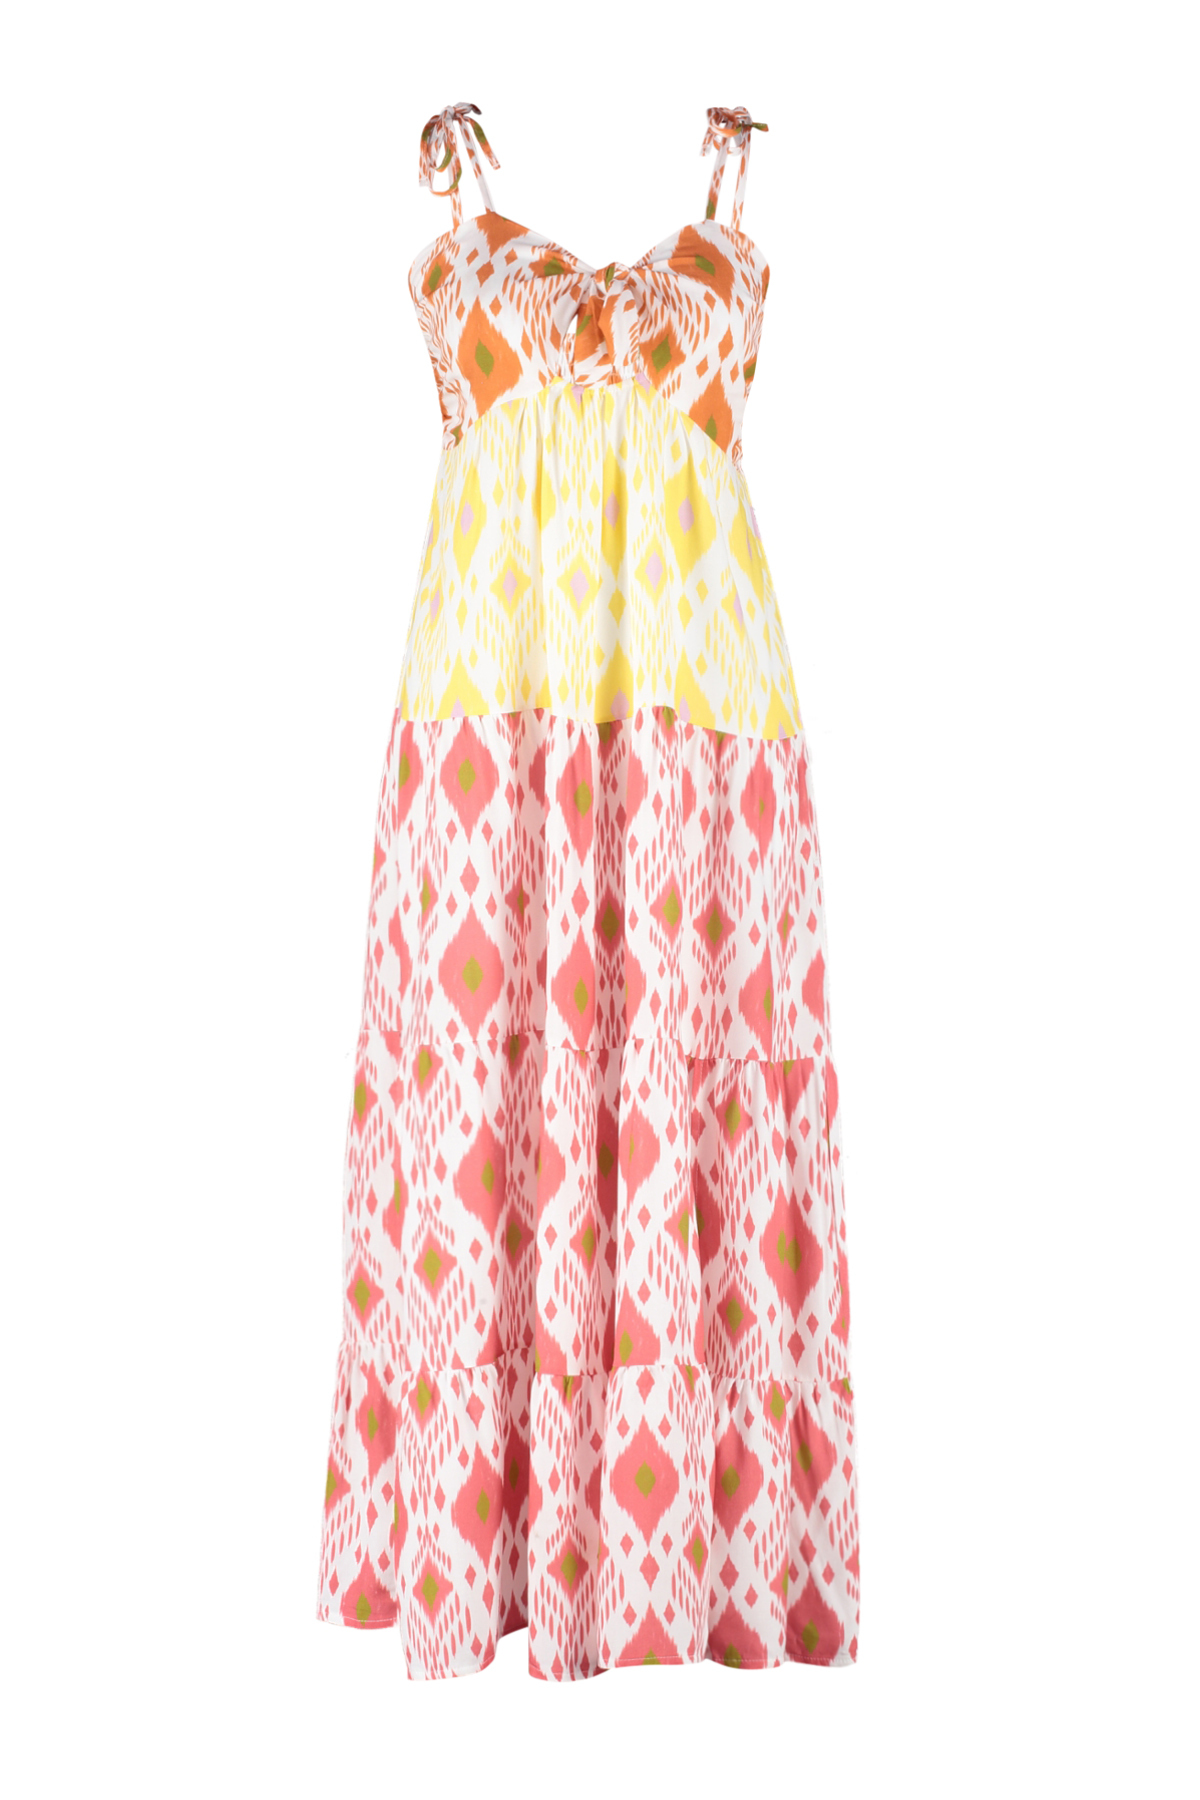 Trendyol Floral Pattern Maxi Woven Tie Beach Dress